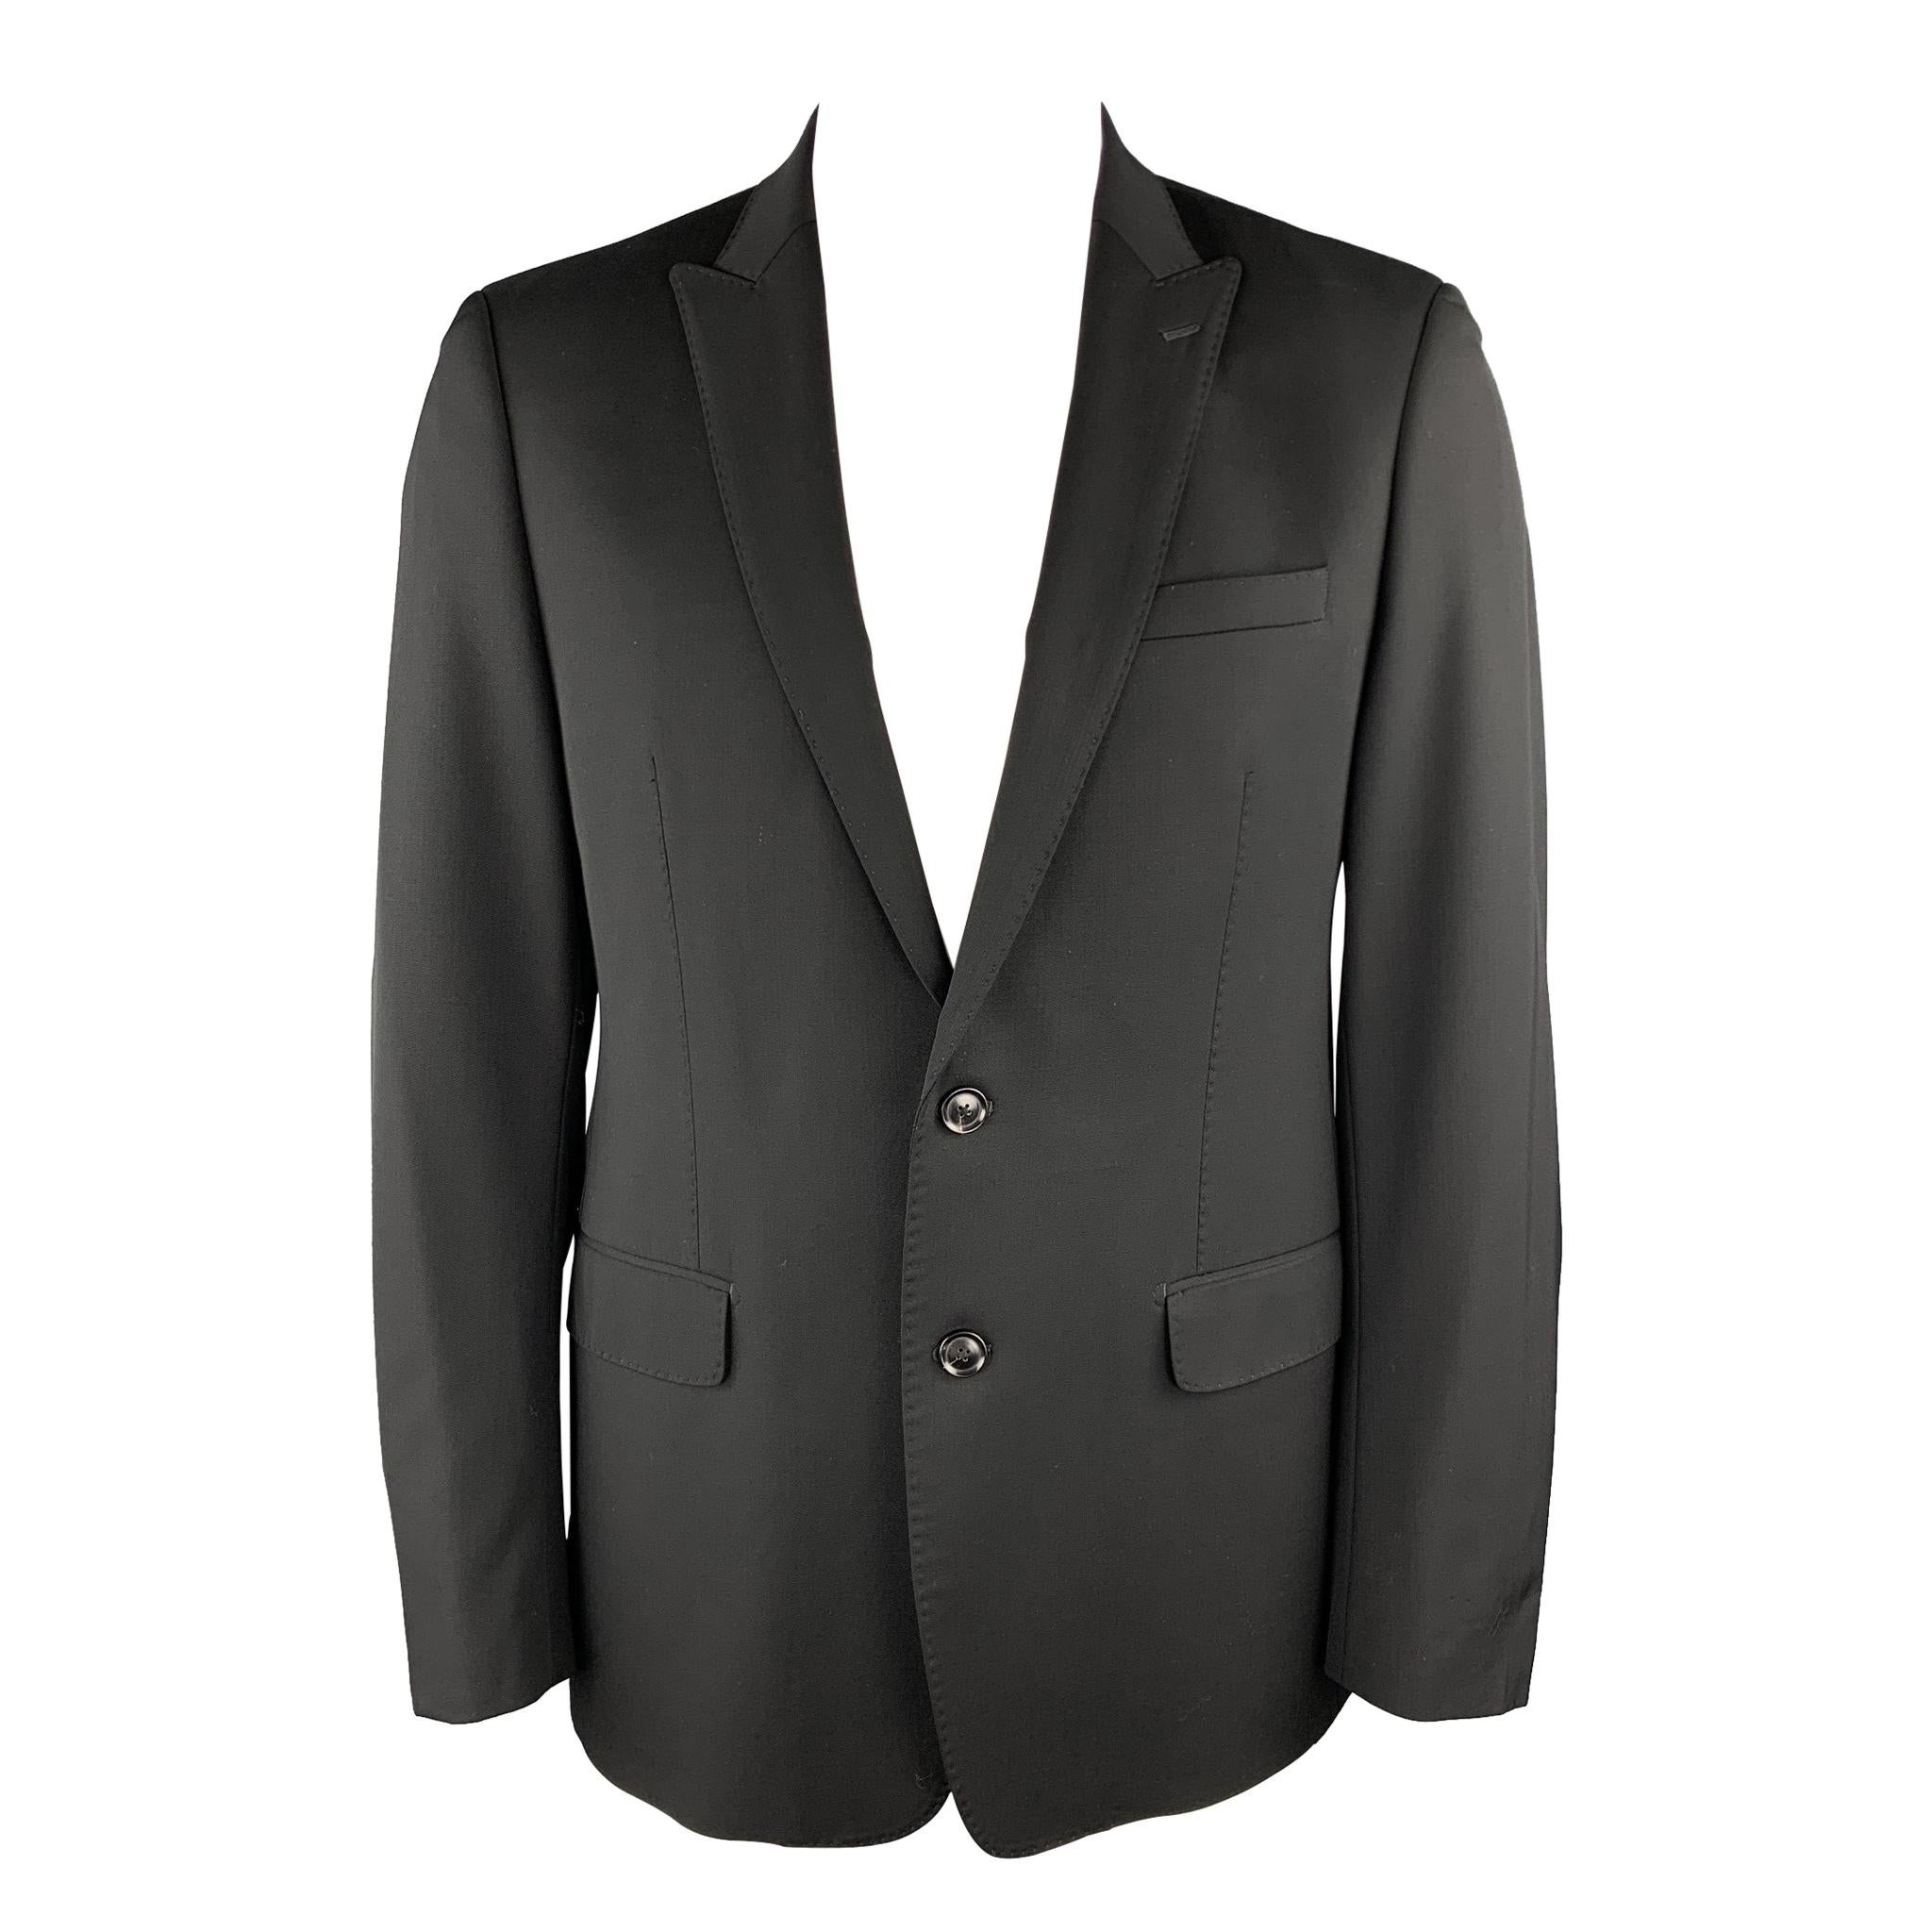 ELIE TAHARI Size 42 Regular Black Wool Peak Lapel Sport Coat